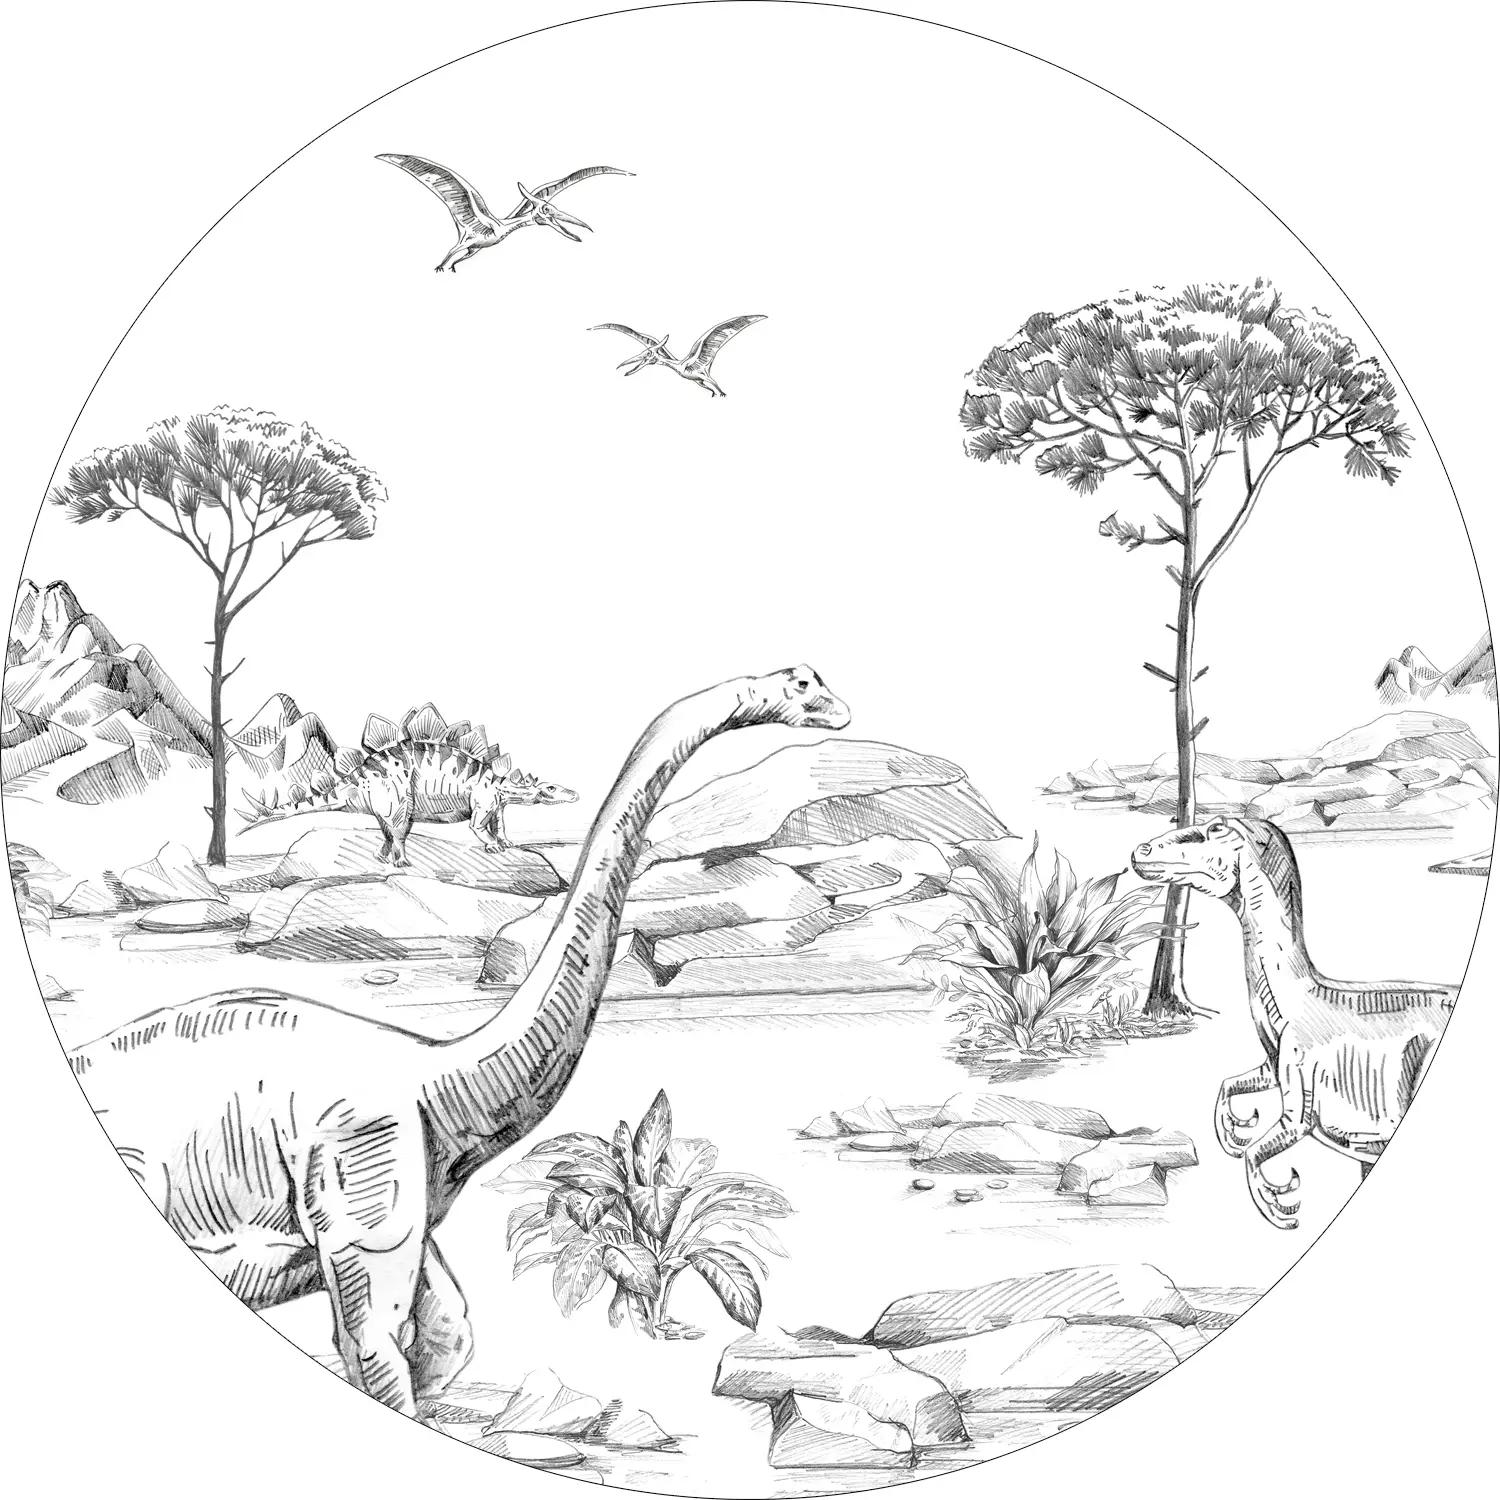 Tapete selbstklebende runde Dinosaurier